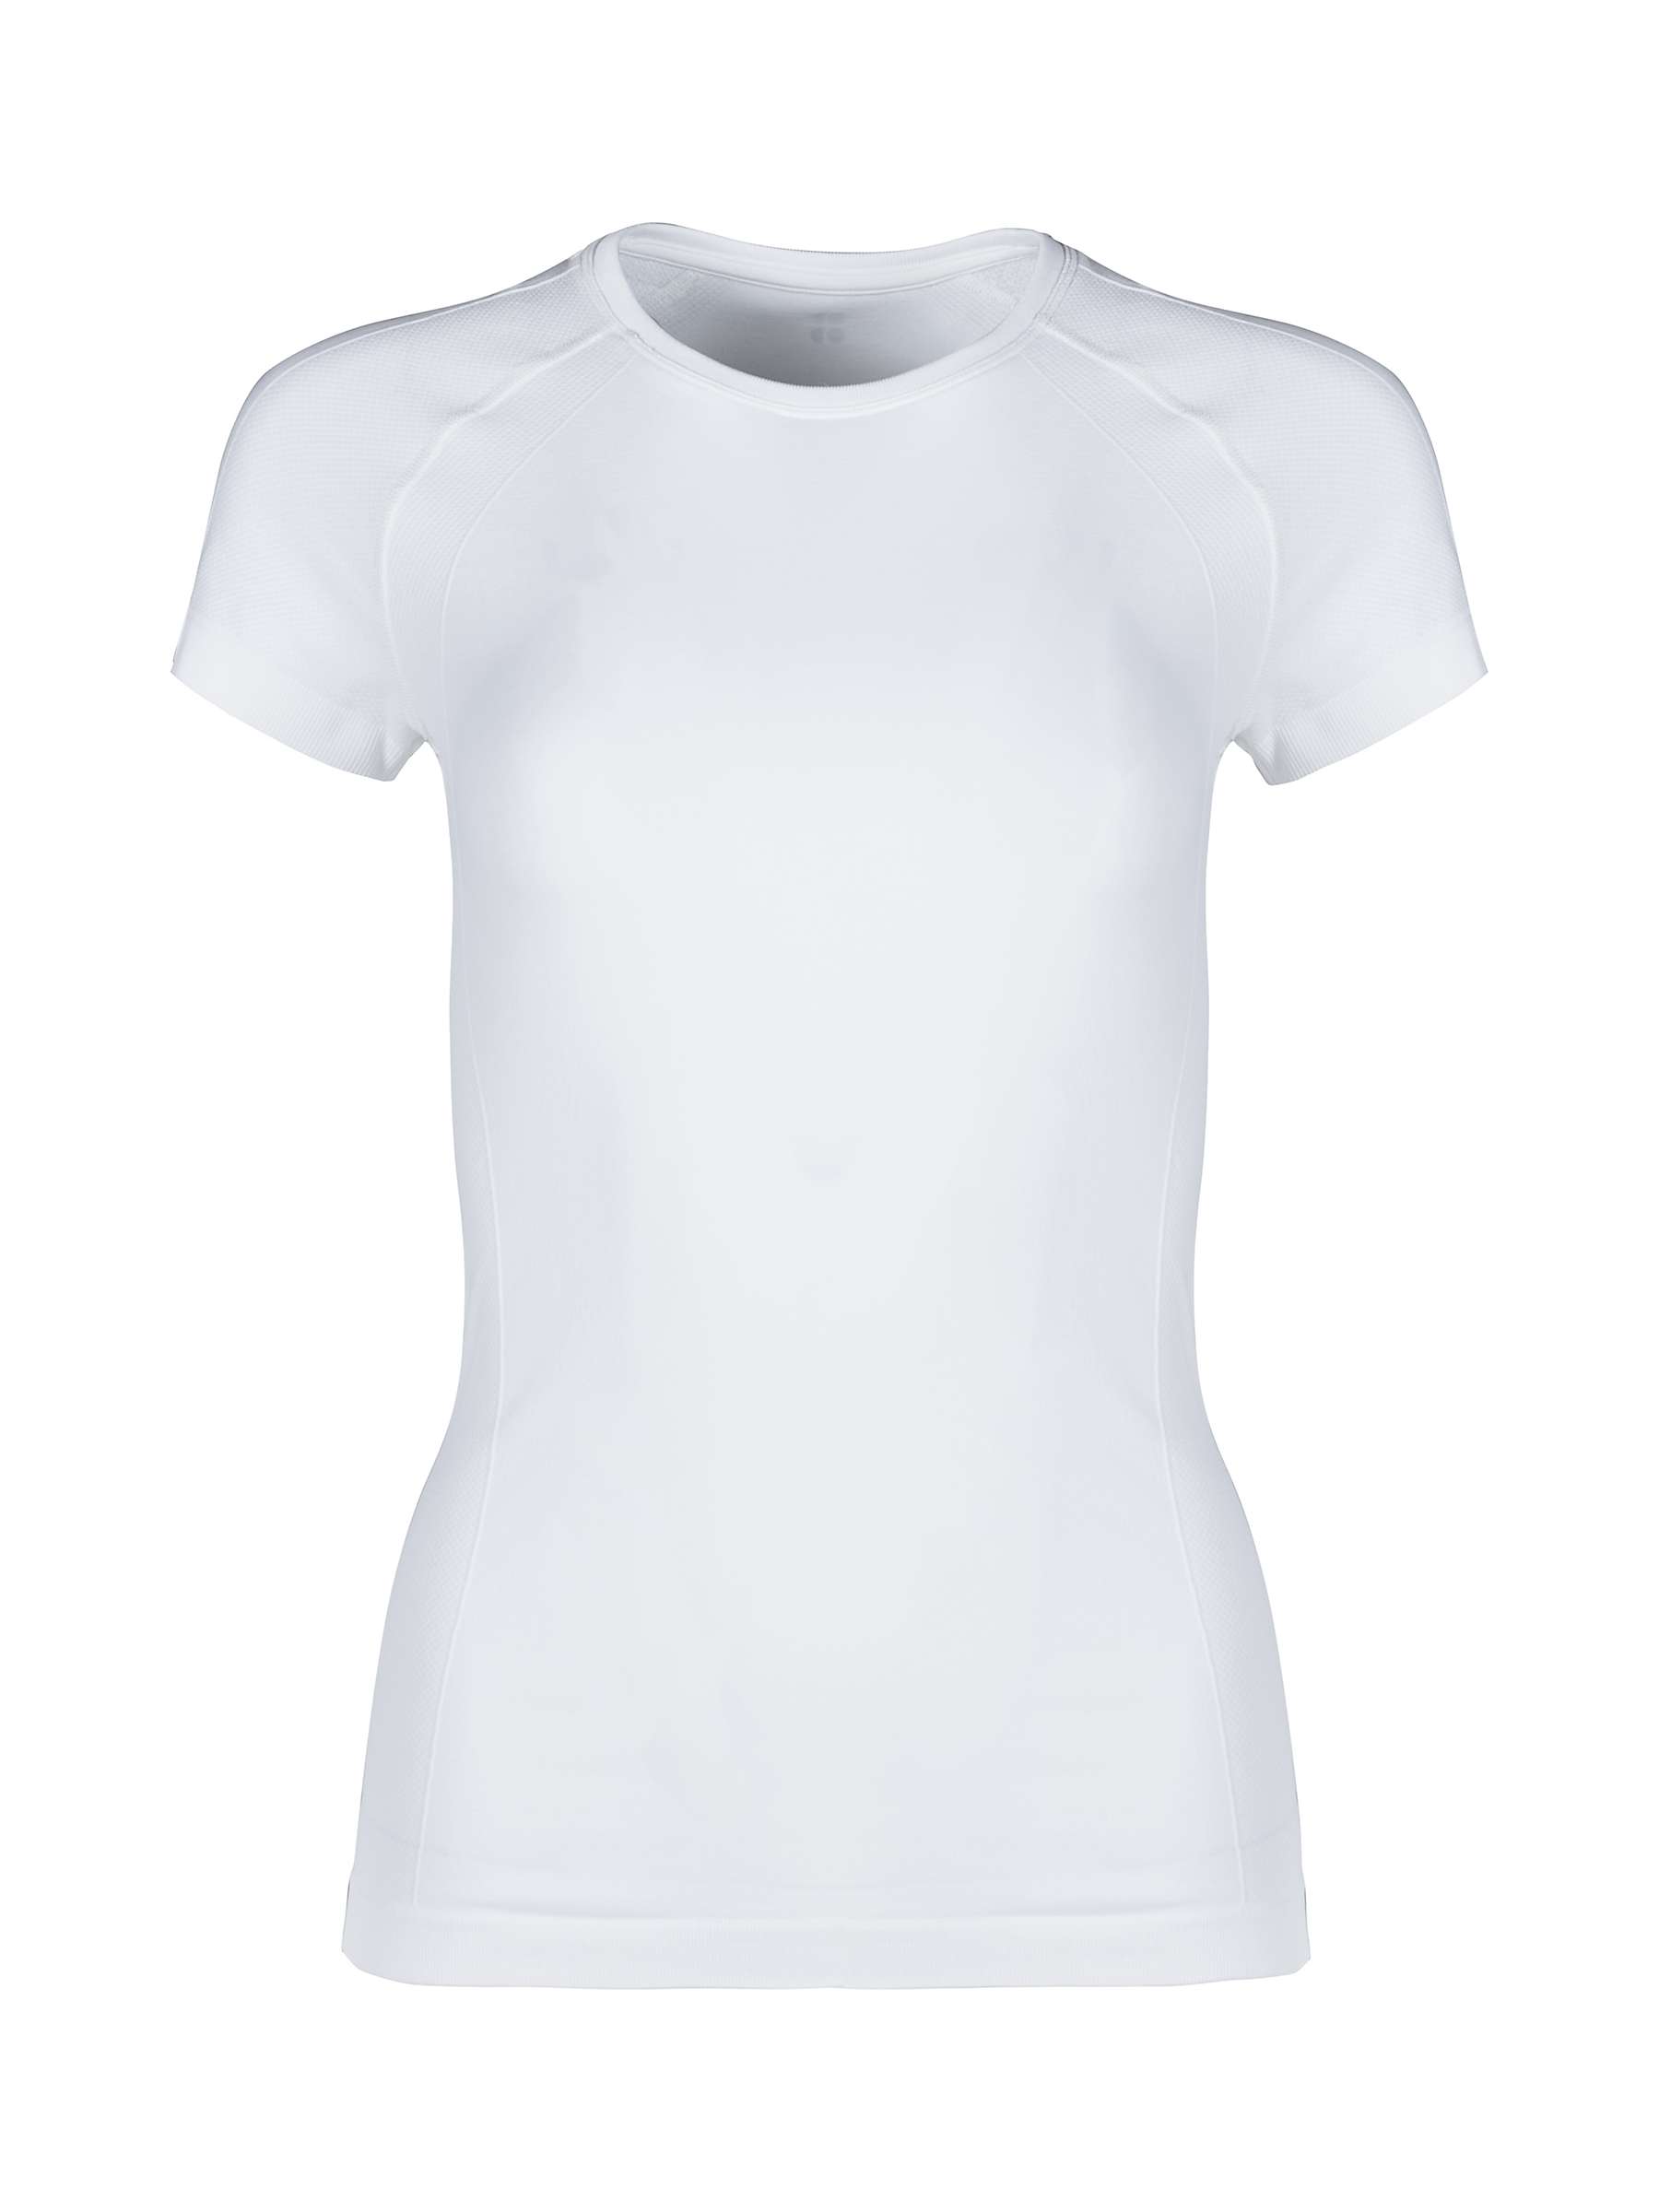 Sweaty Betty Athlete Seamless Gym Top, White at John Lewis & Partners